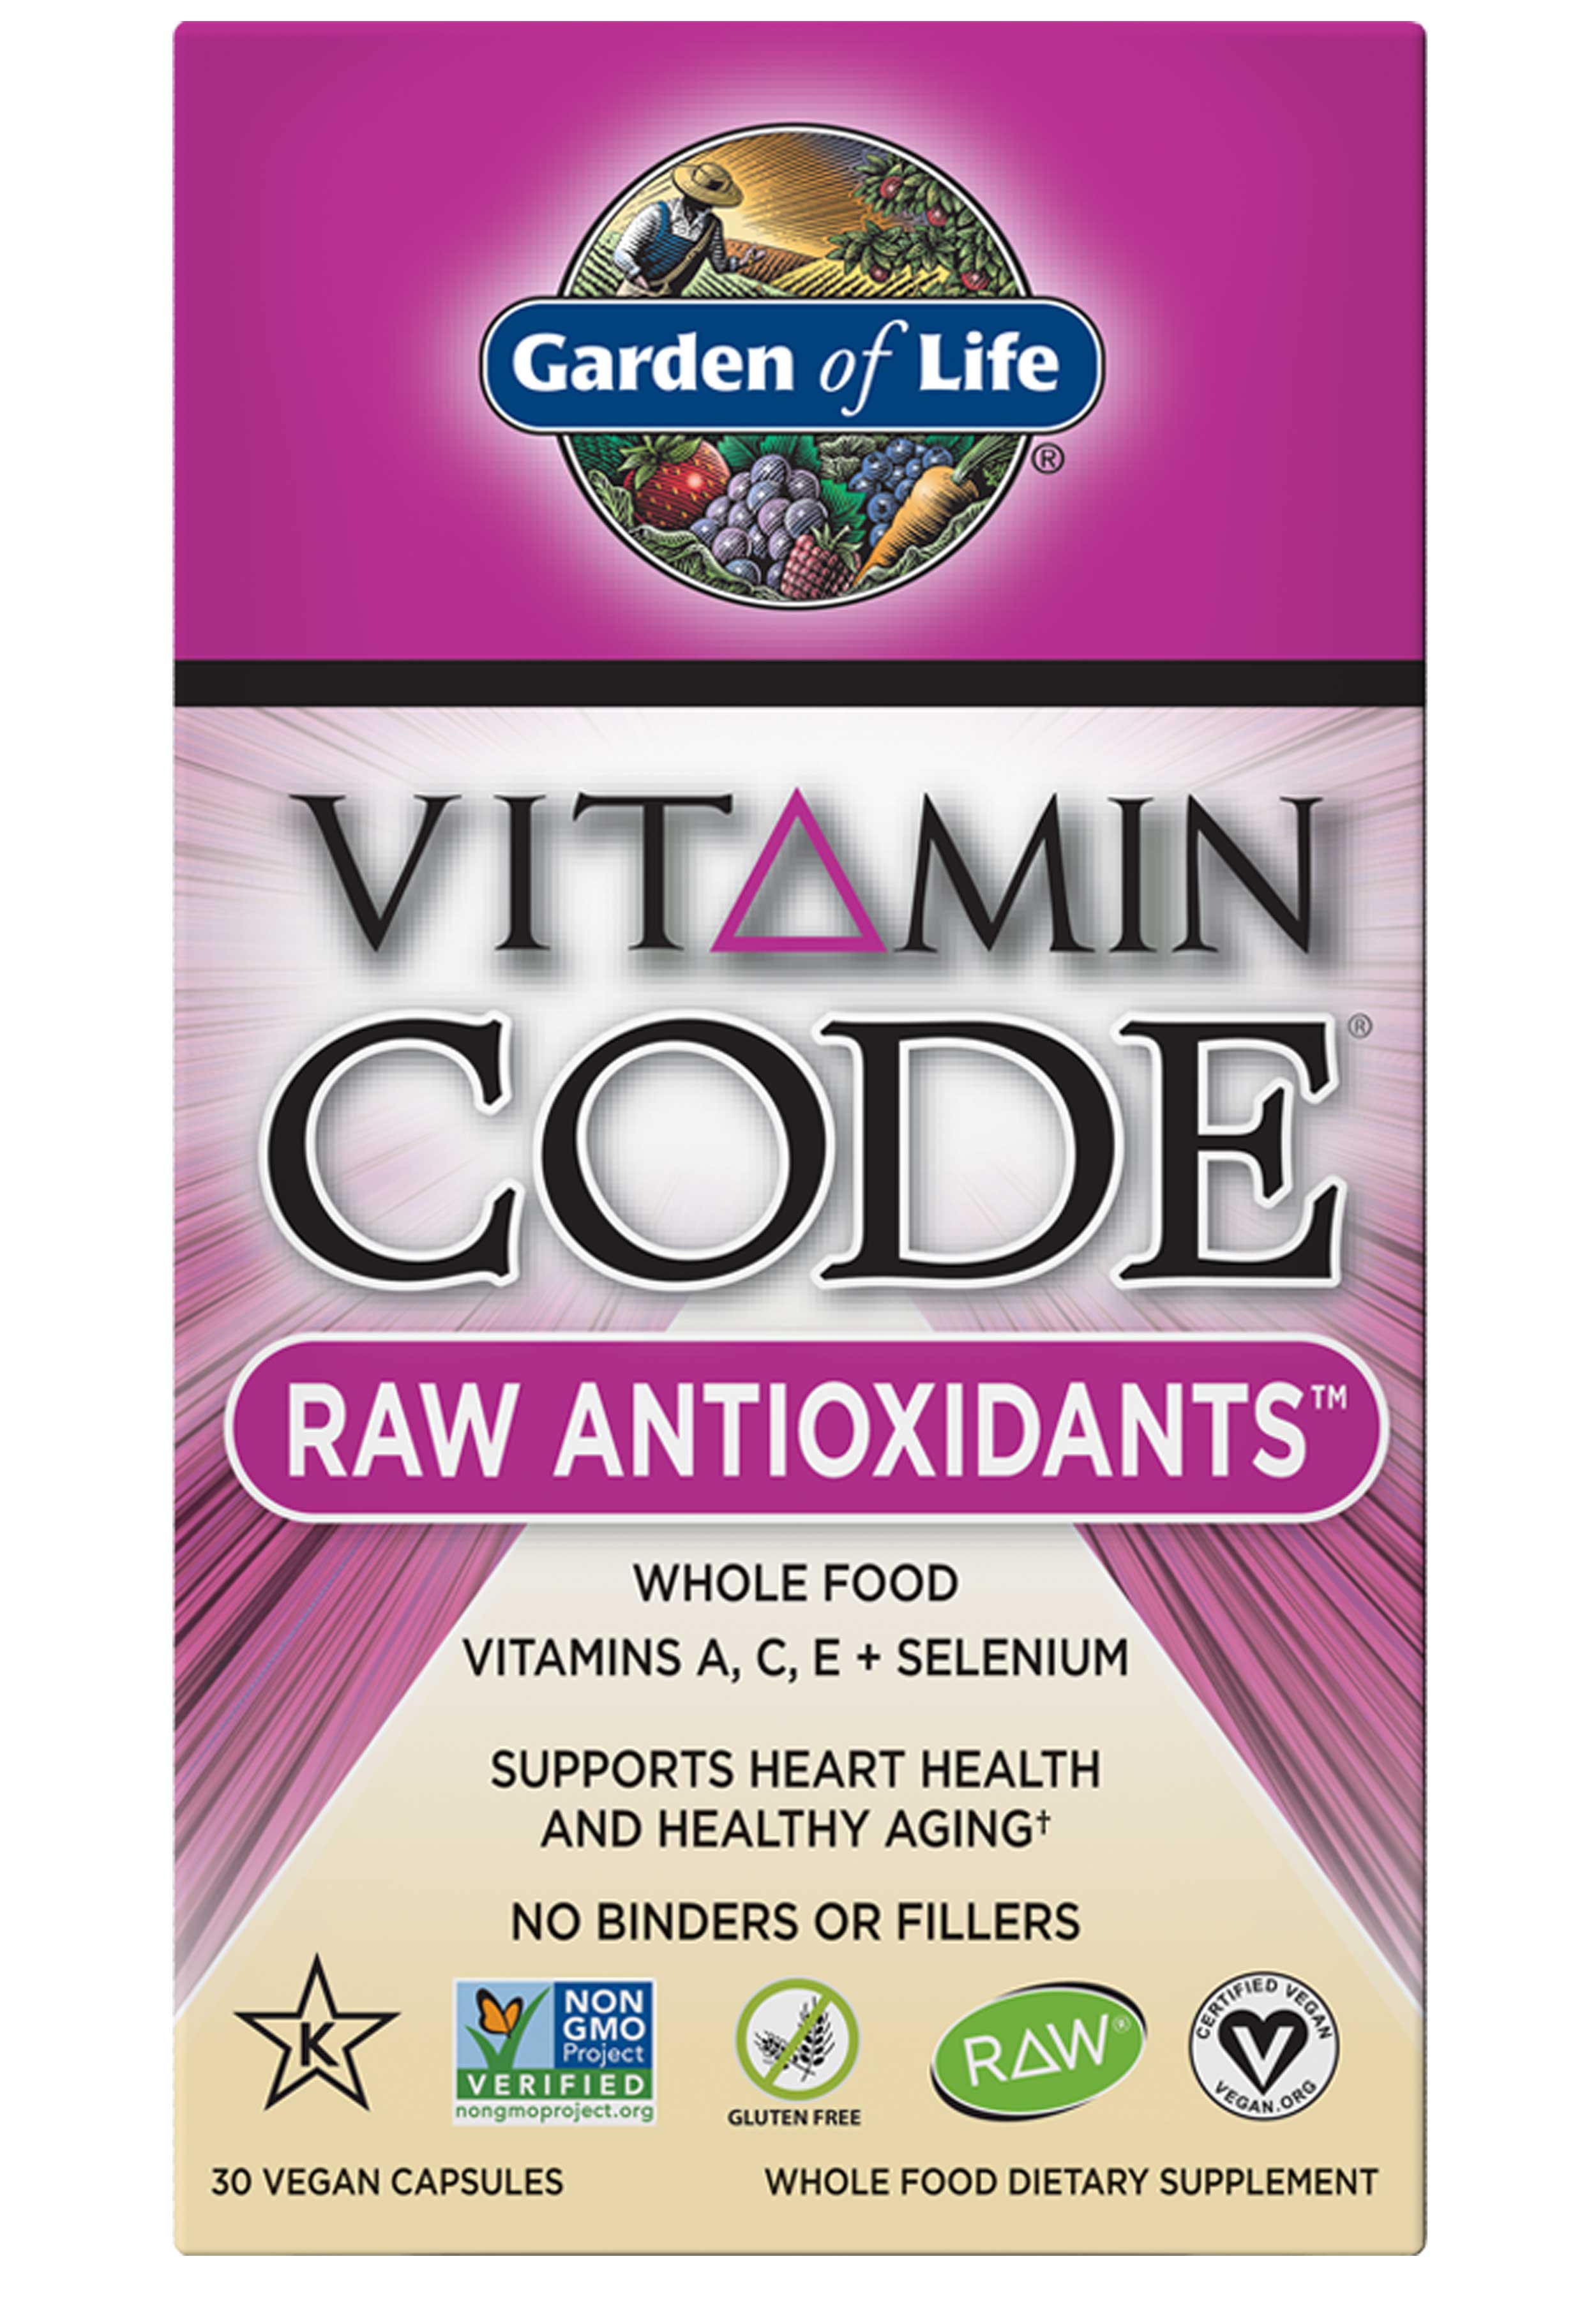 Garden of Life Vitamin Code RAW Antioxidants